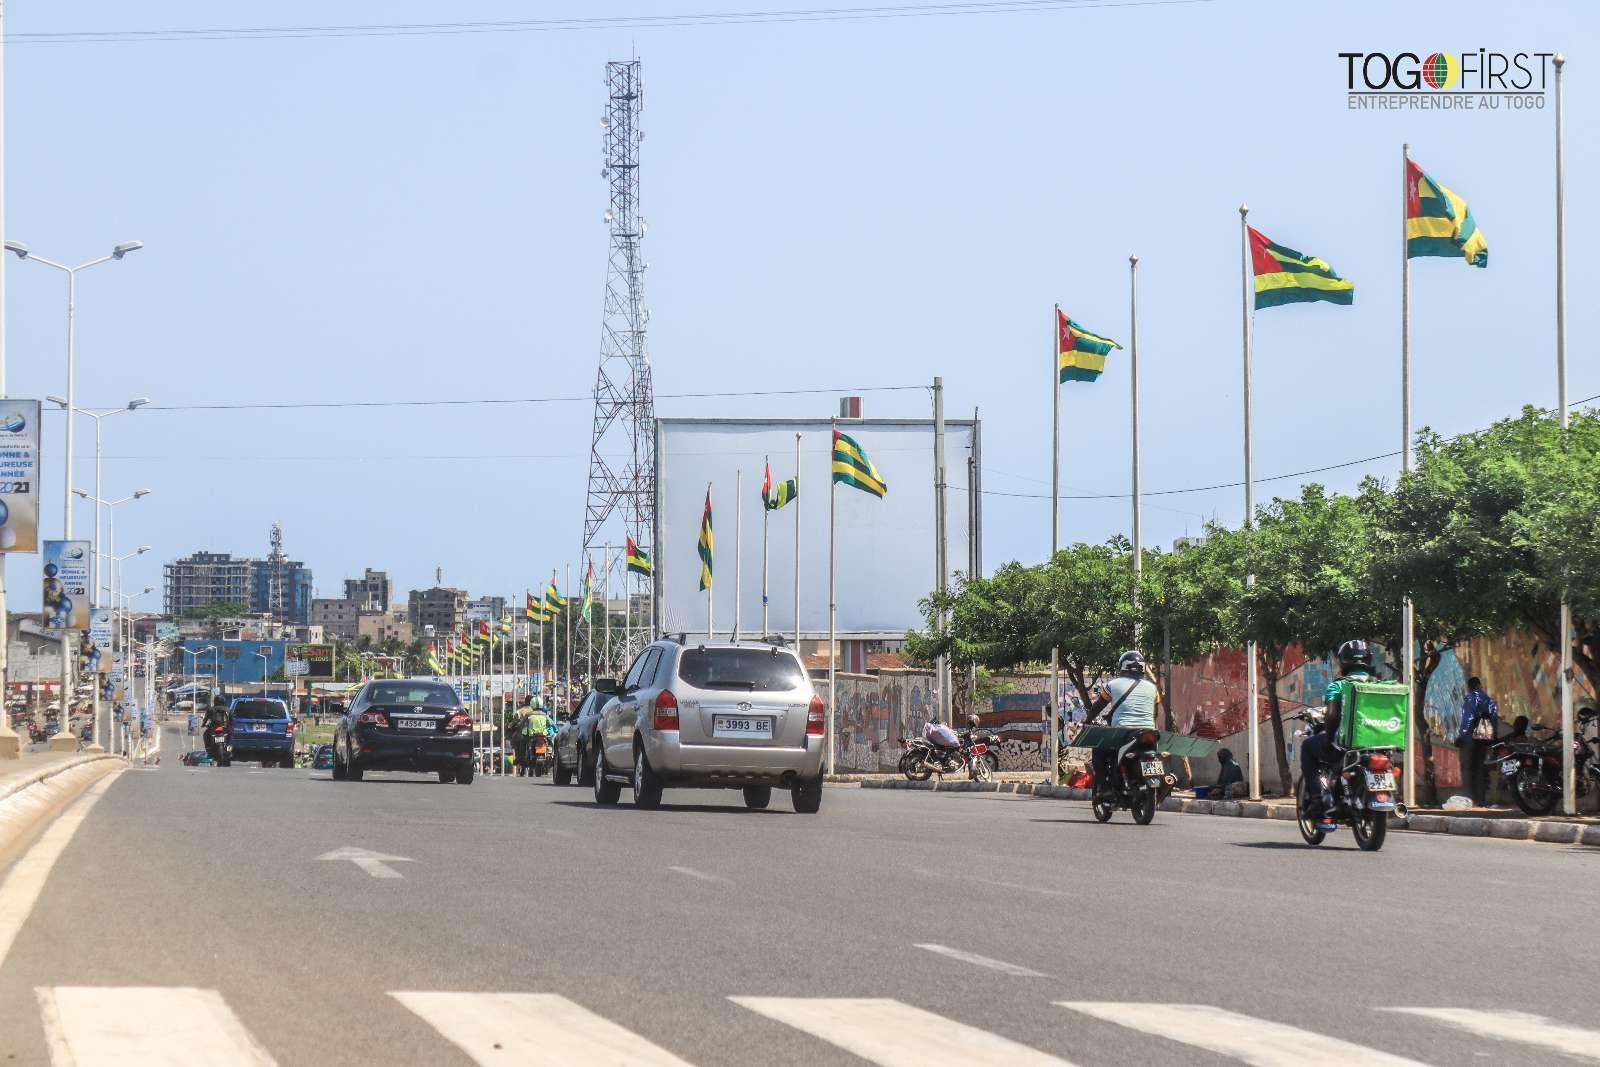 Umoa-Titres : le Togo lève 30 milliards FCFA